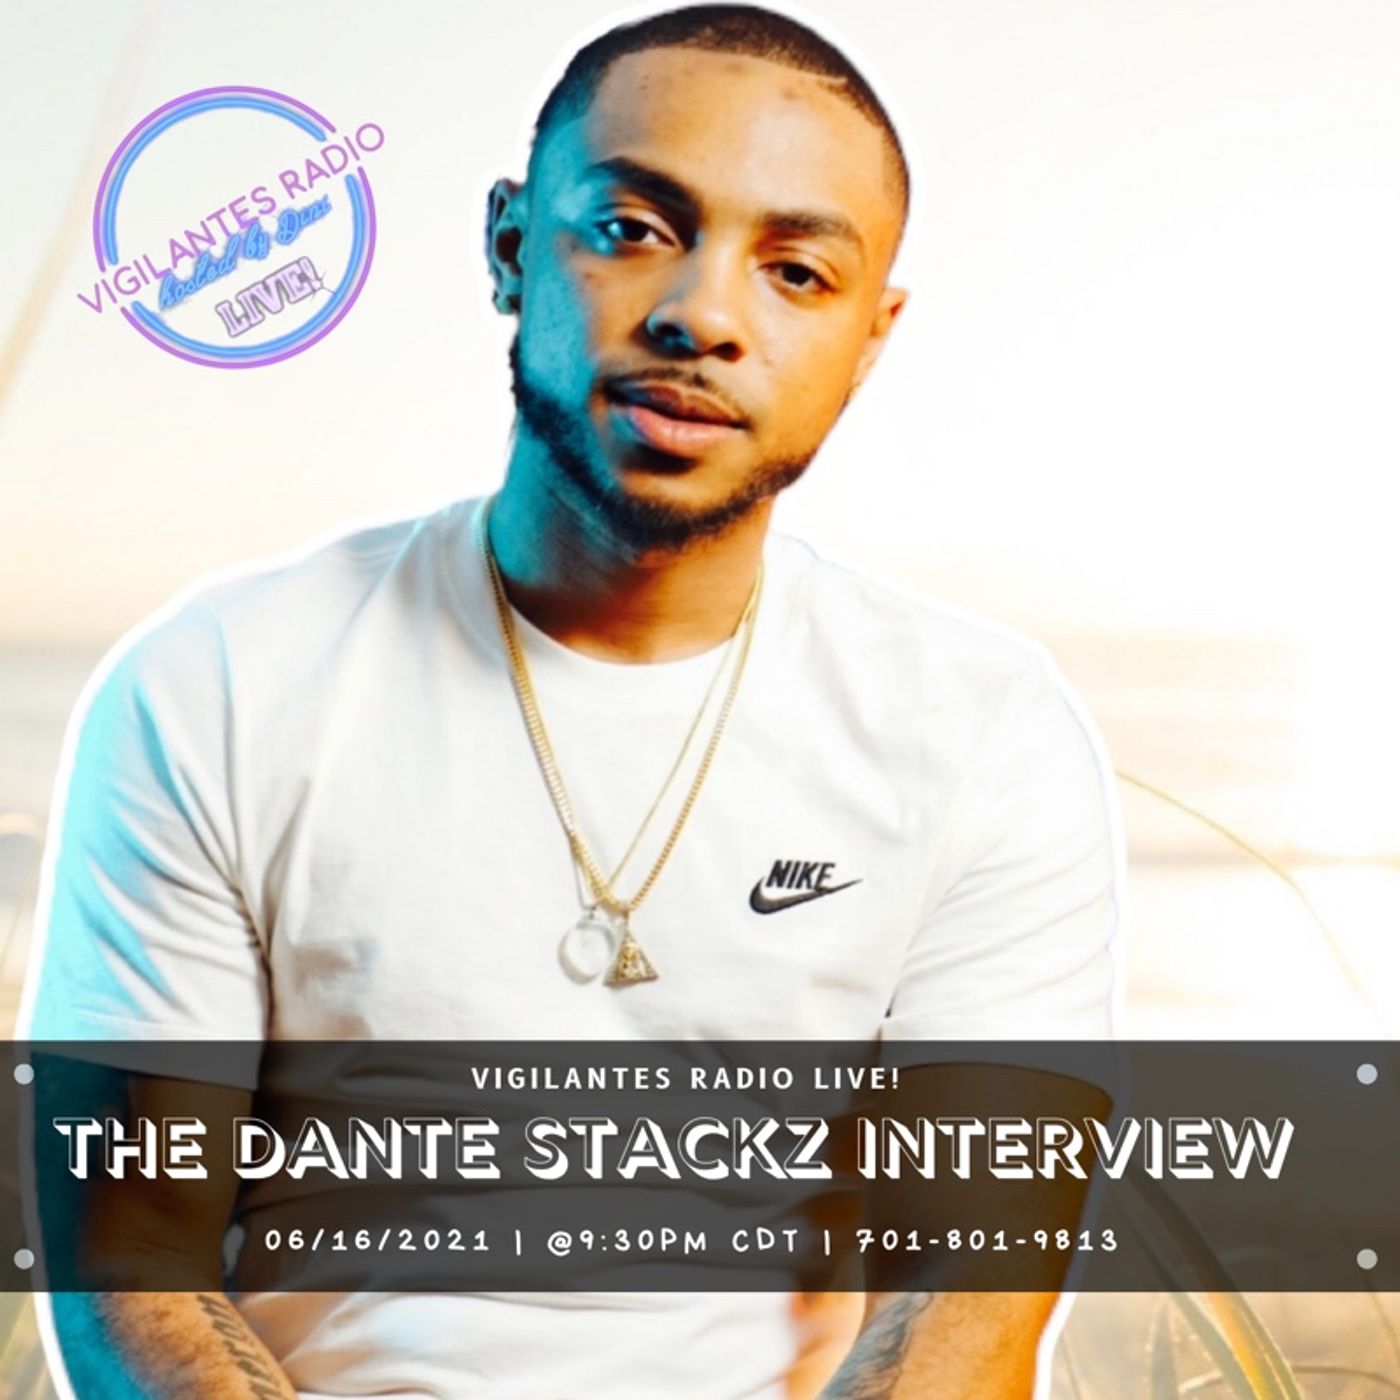 The Dante Stackz Interview. Image